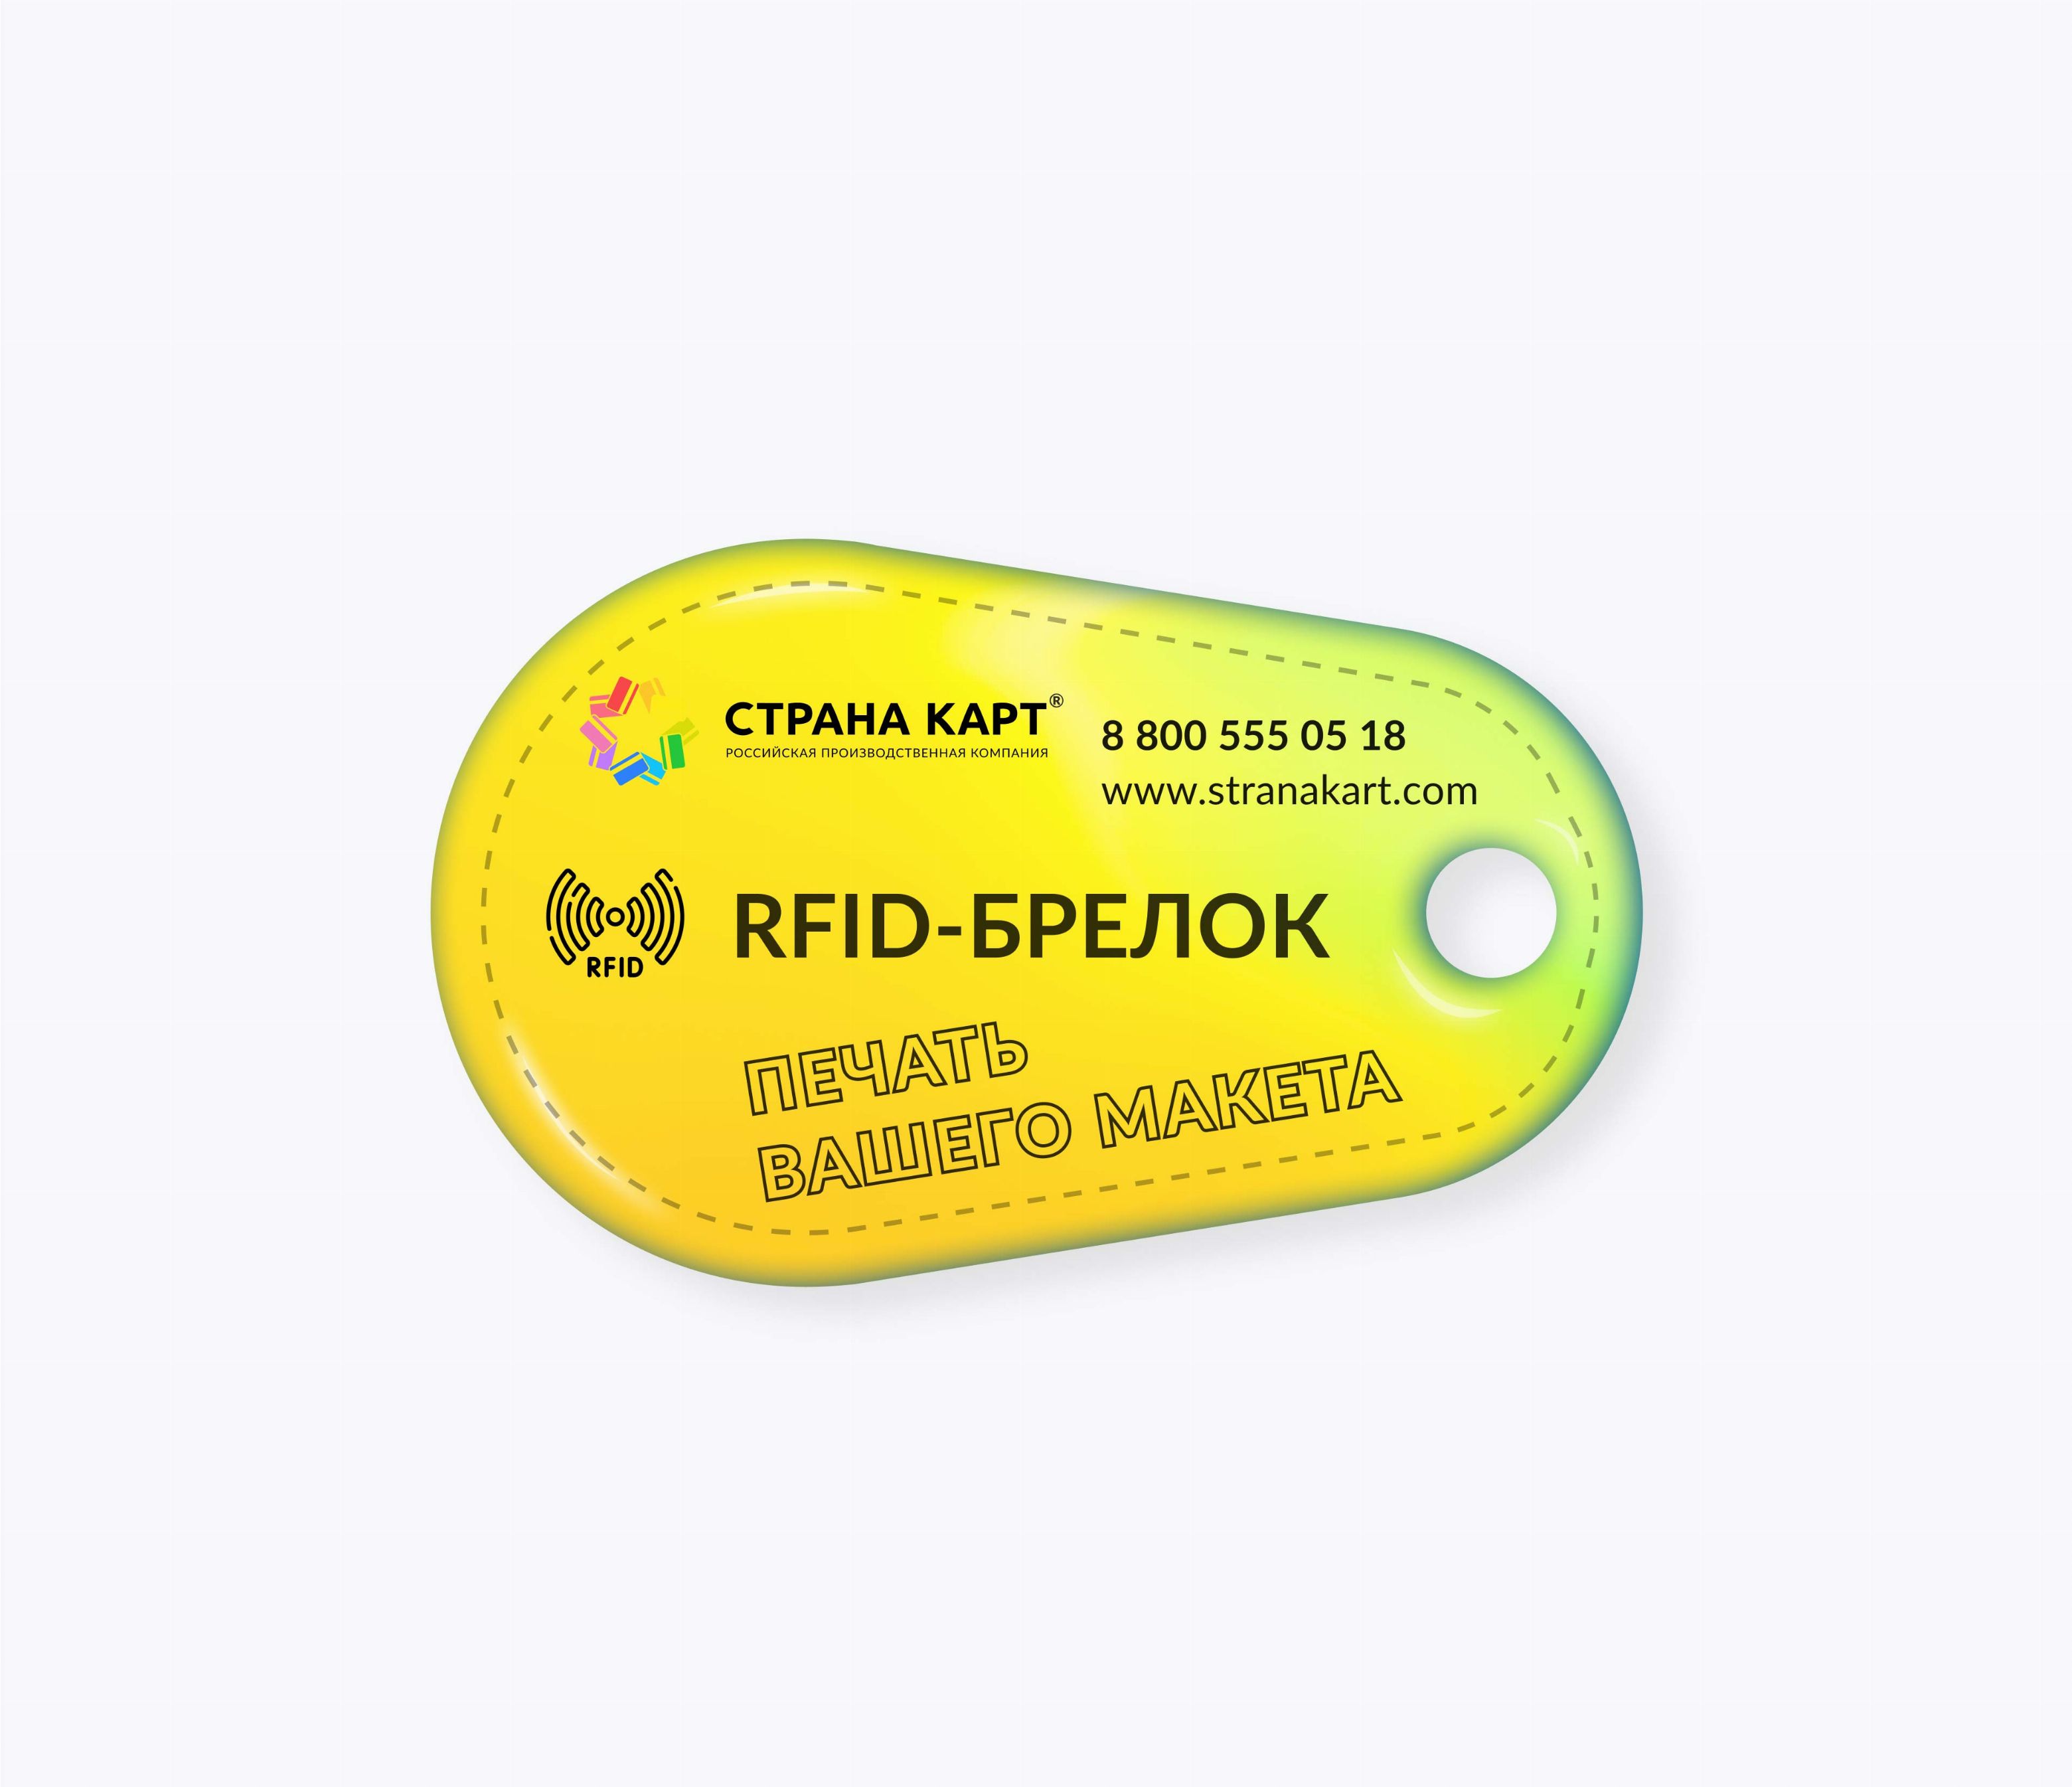 Каплевидные RFID-брелоки NEOKEY® с чипом NXP MIFARE ID 4 byte nUID RFID-брелоки NEOKEY® с чипом NXP MIFARE ID 4 byte nUID и вашим логотипом